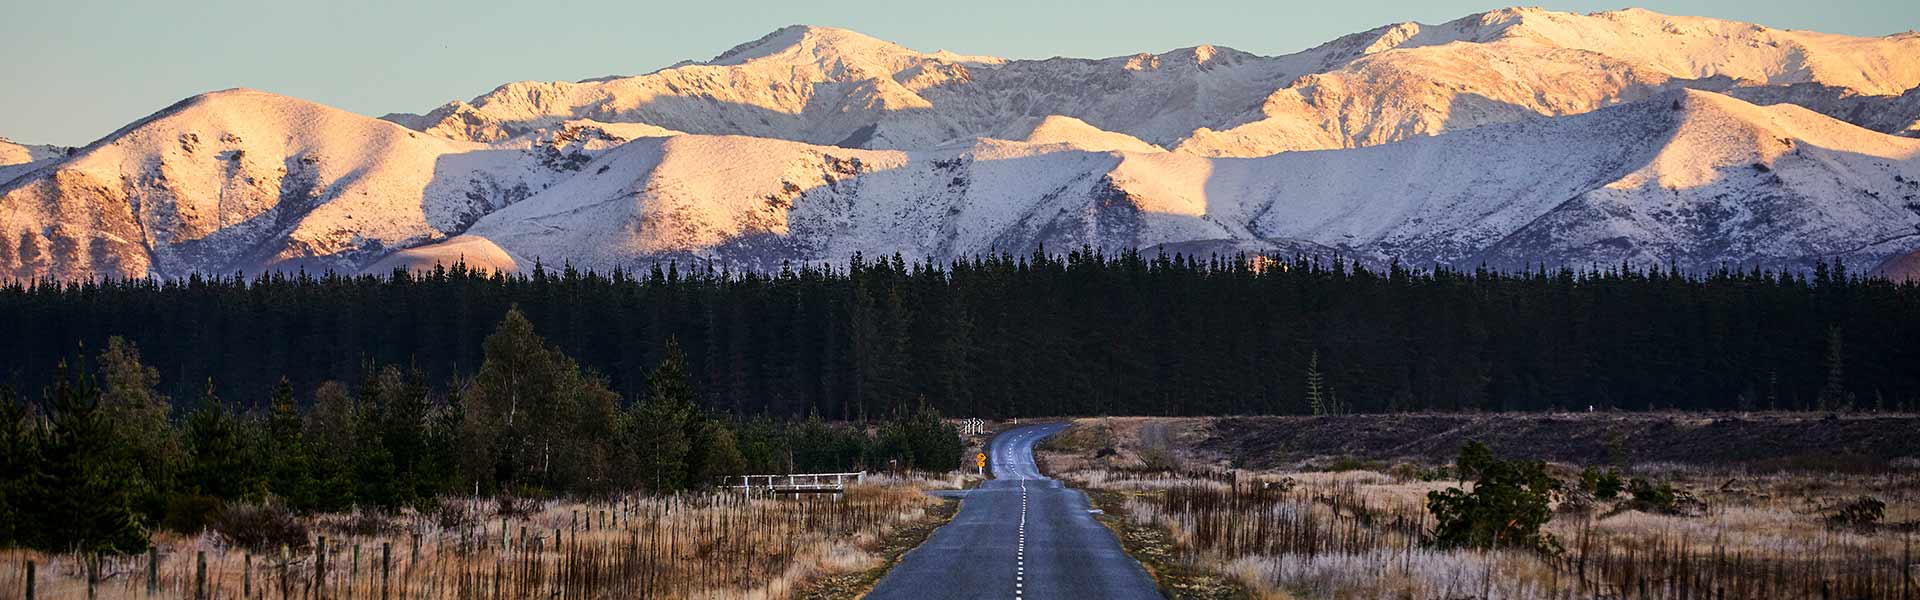 New Zealand scenic road Image Credit: Matt Crawford